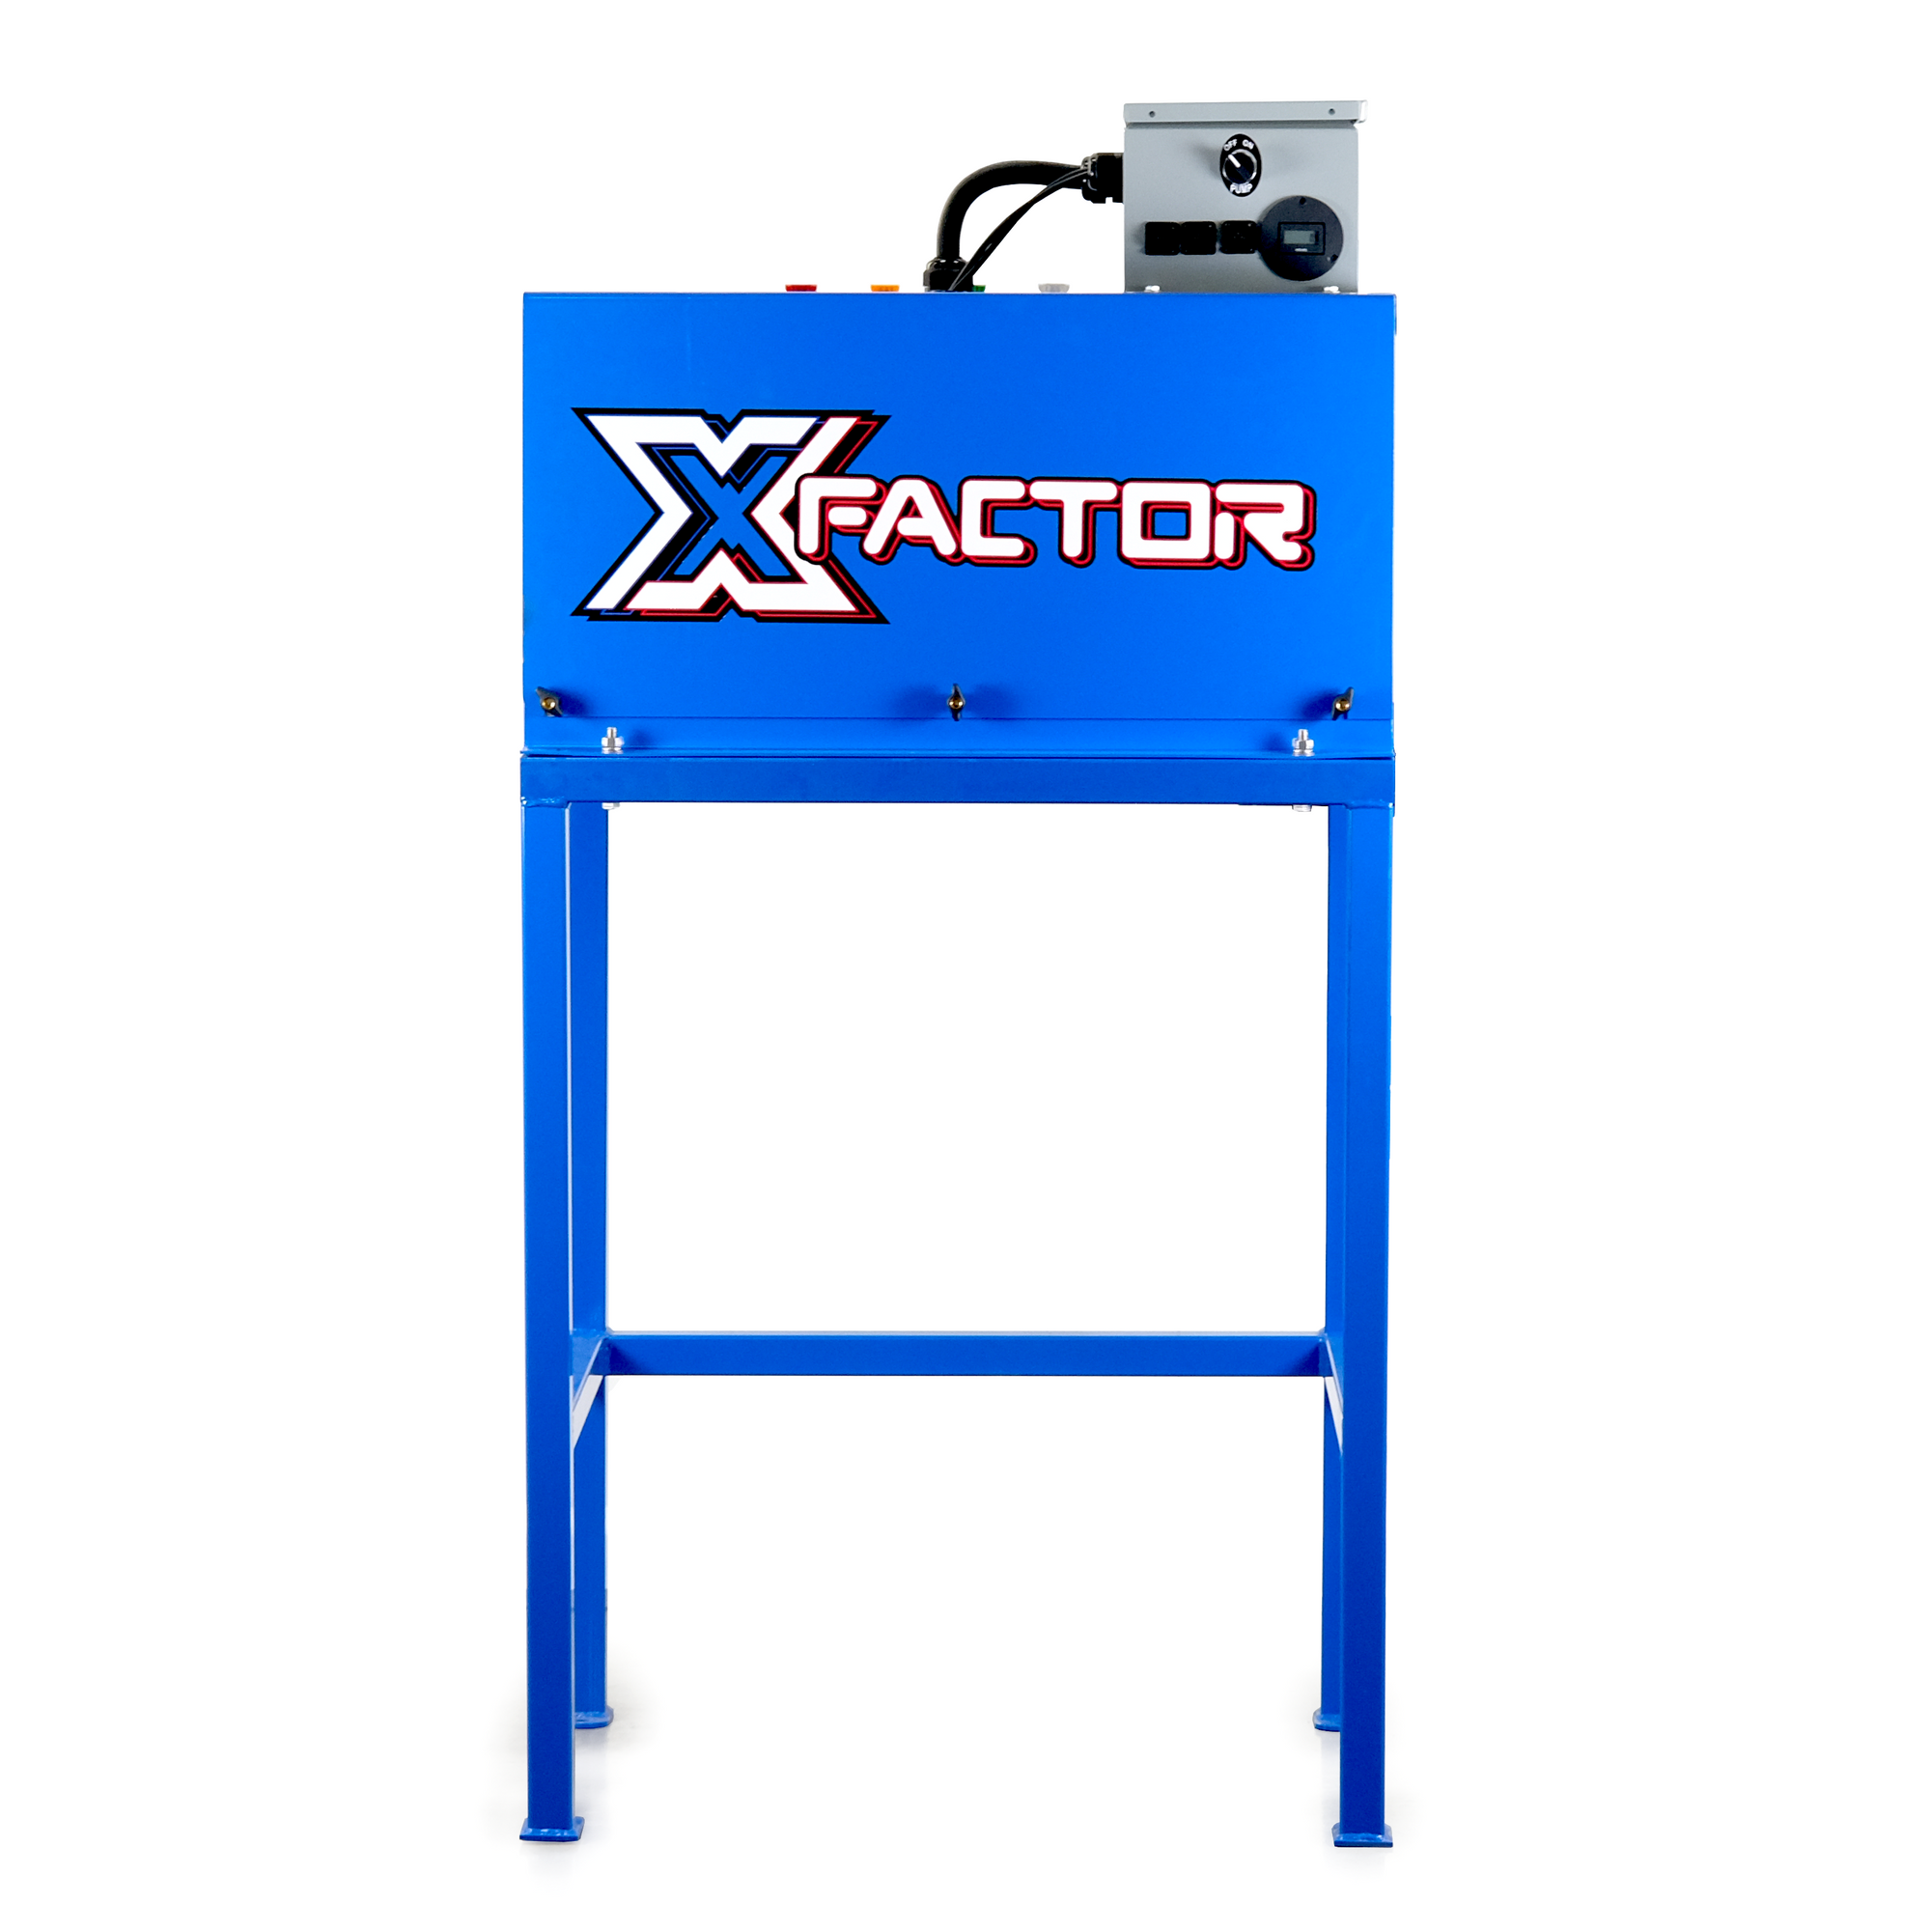 X Factor Stationary 220v Electric Power Washer - Chem-X